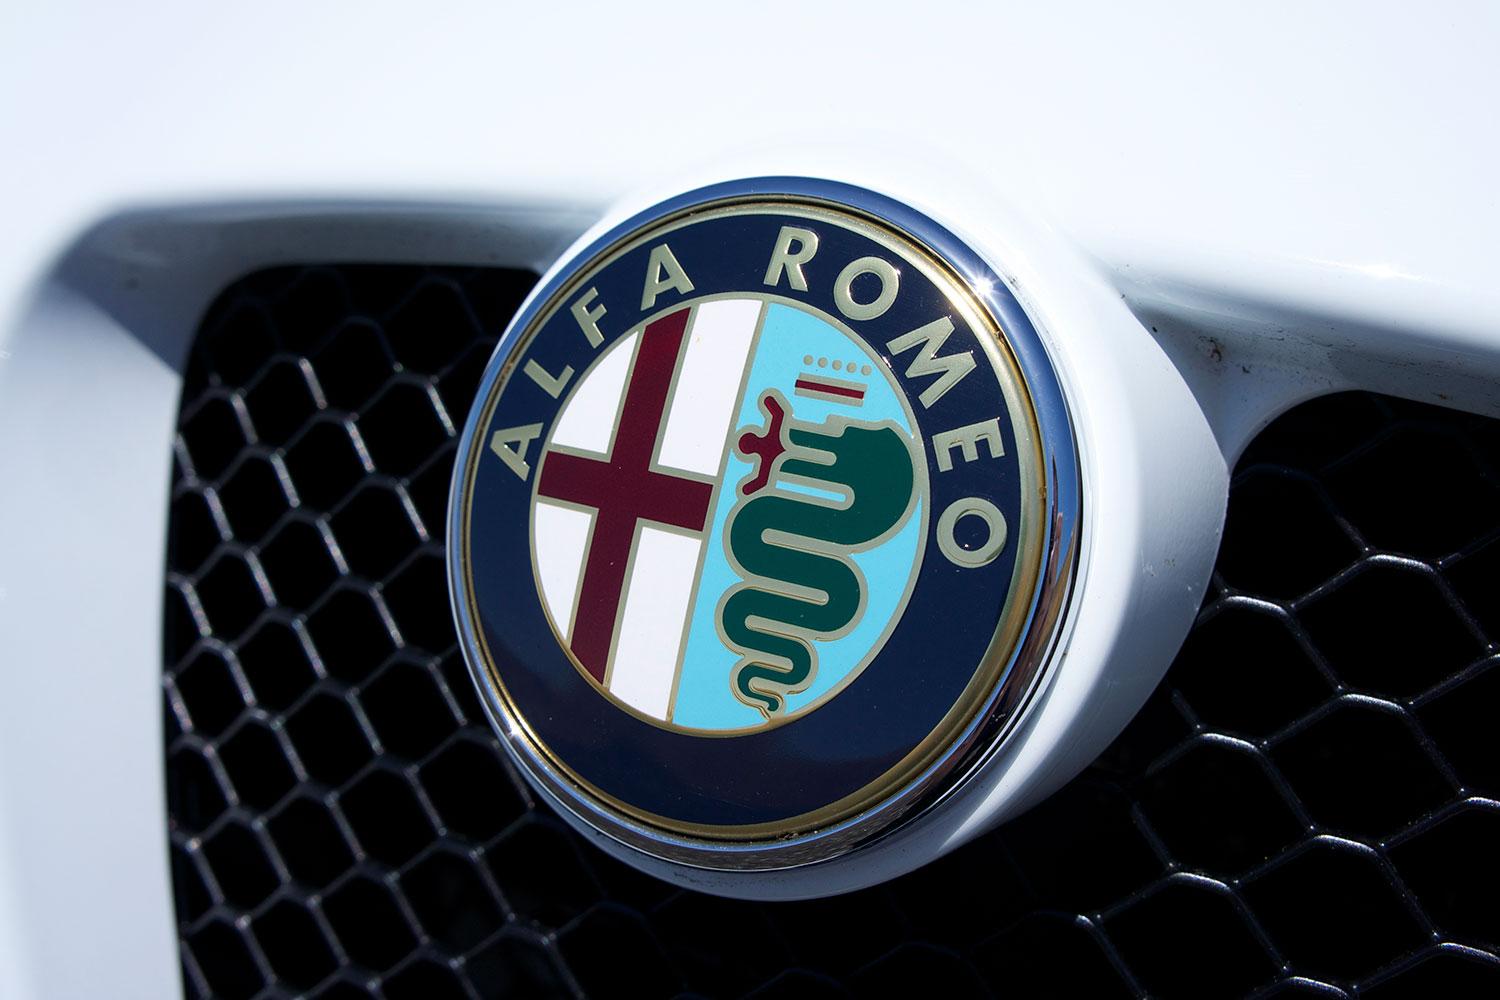 2015 Alfa Romeo 4C badge